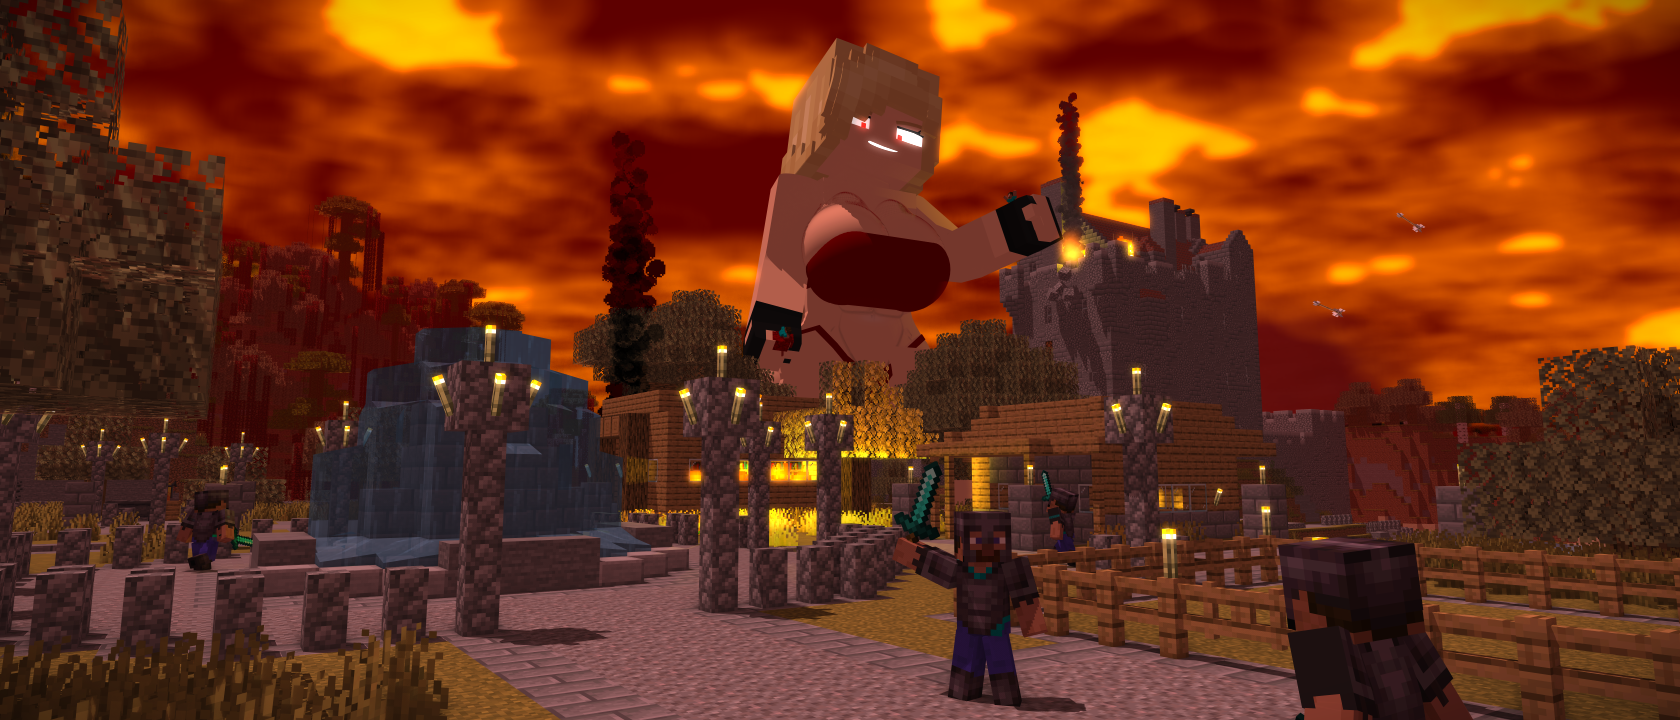 Giant thicc Minecraft Girl raids a Hypixel castle - Minecraft Fan Art ...